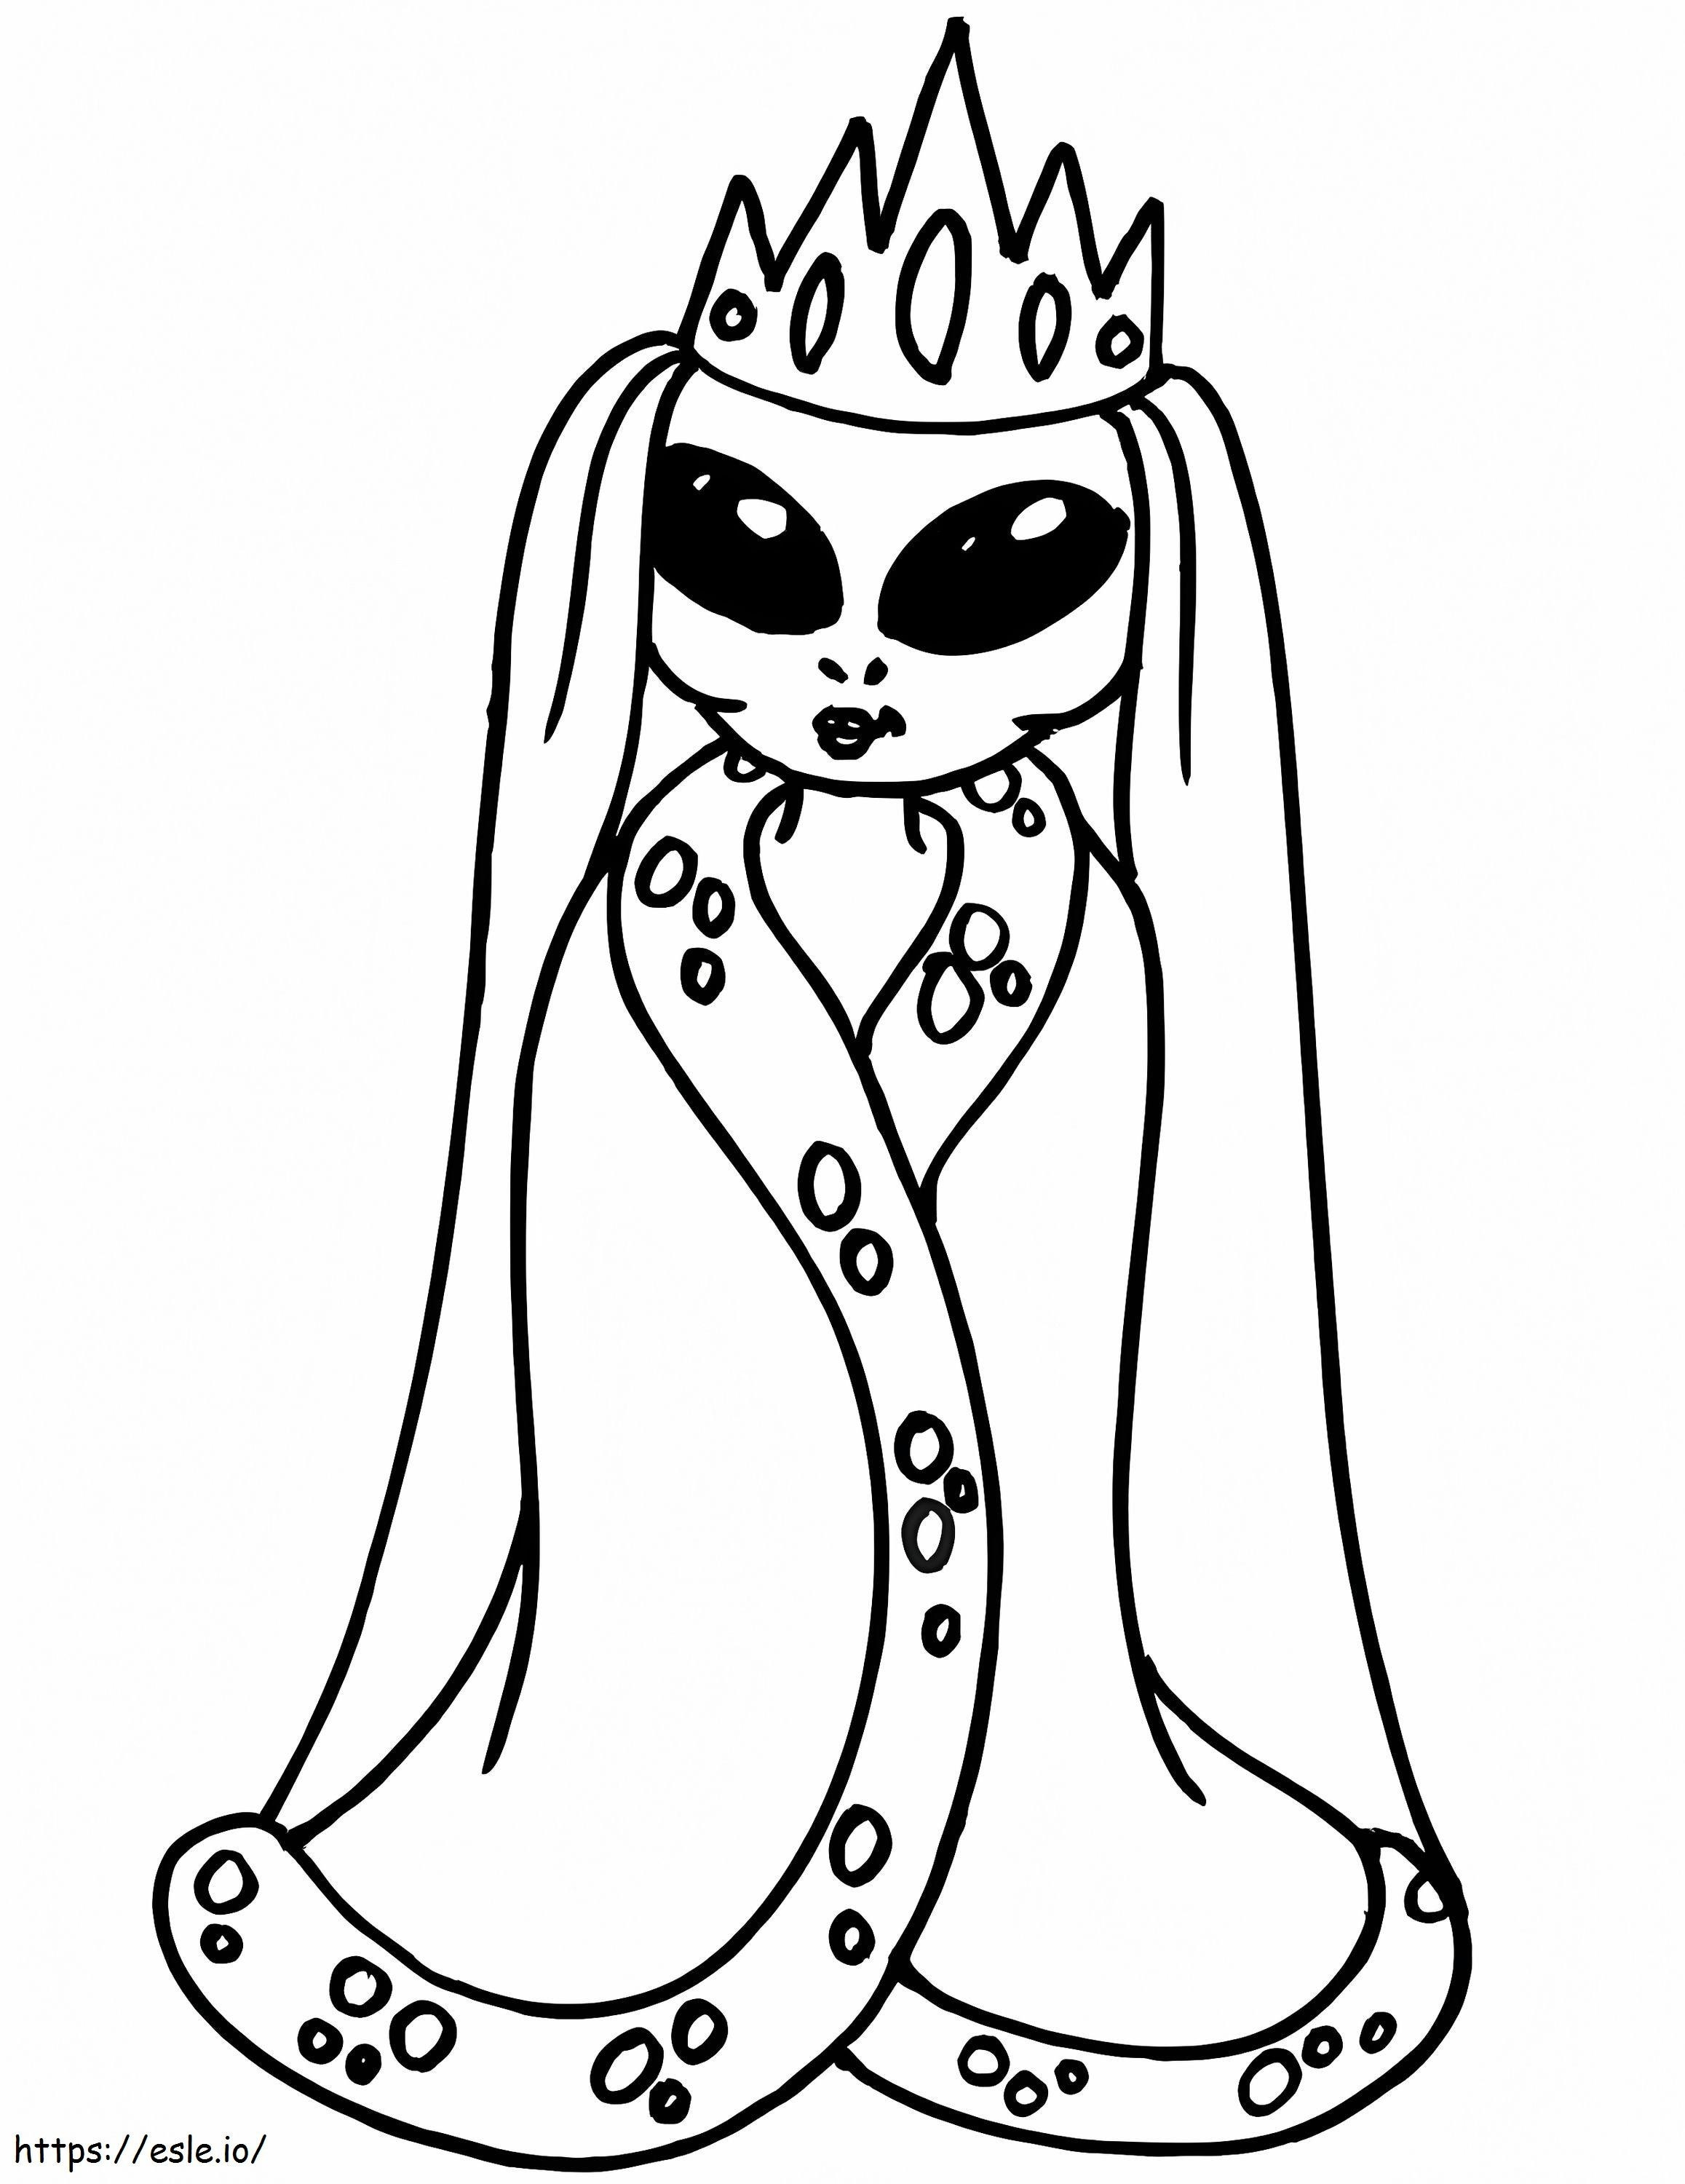 Alien-Königin ausmalbilder